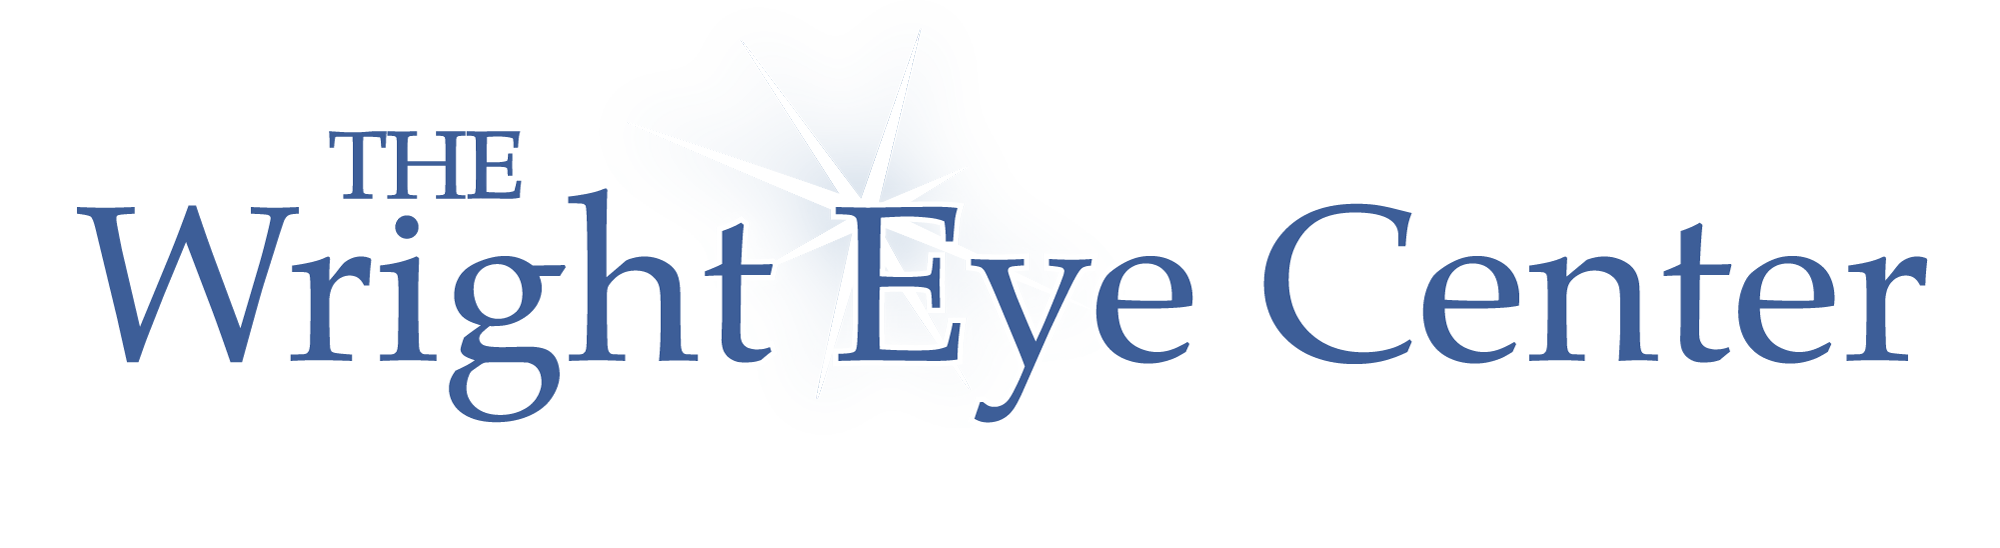 Wright Eye Center Logo